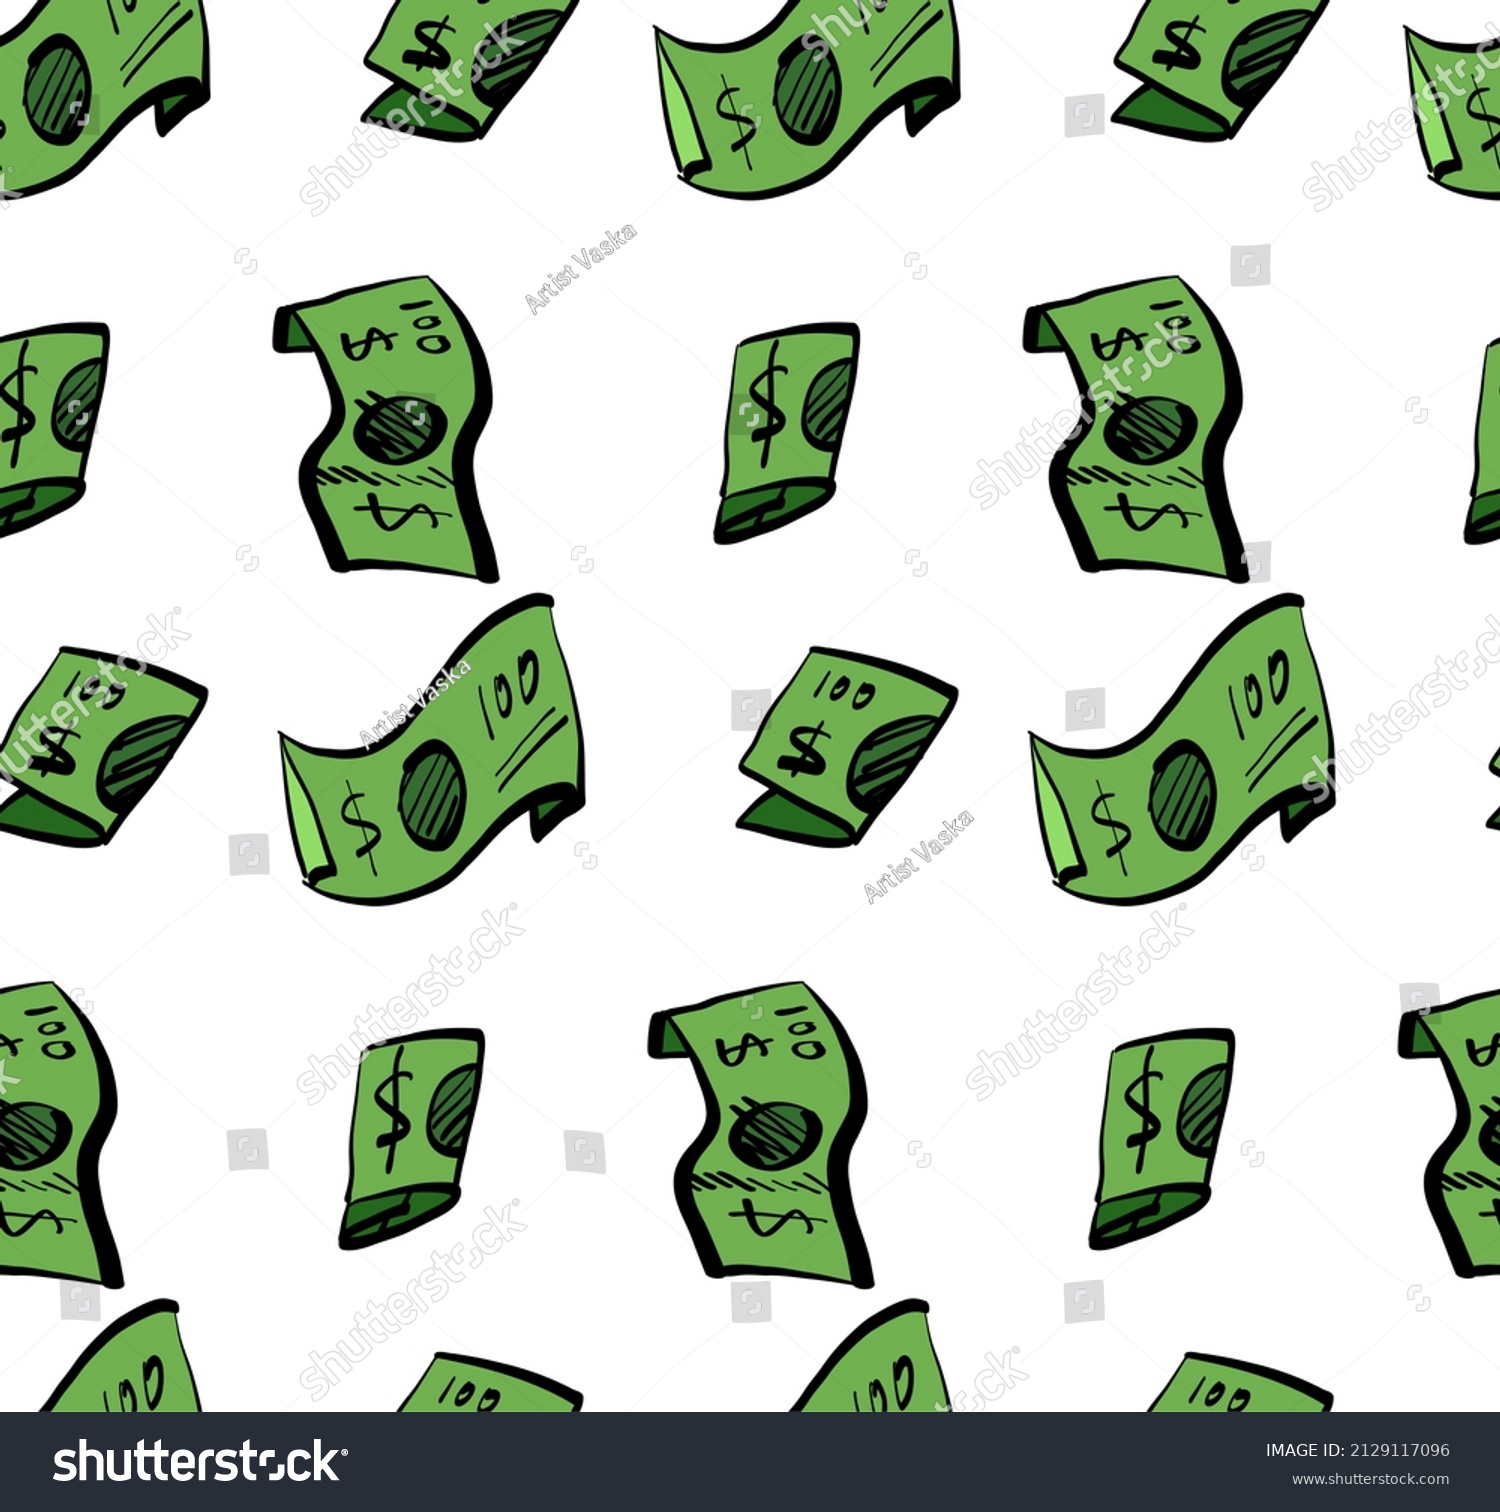 Money Dollar Bills Cartoon Drawing Illustration Stock Illustration